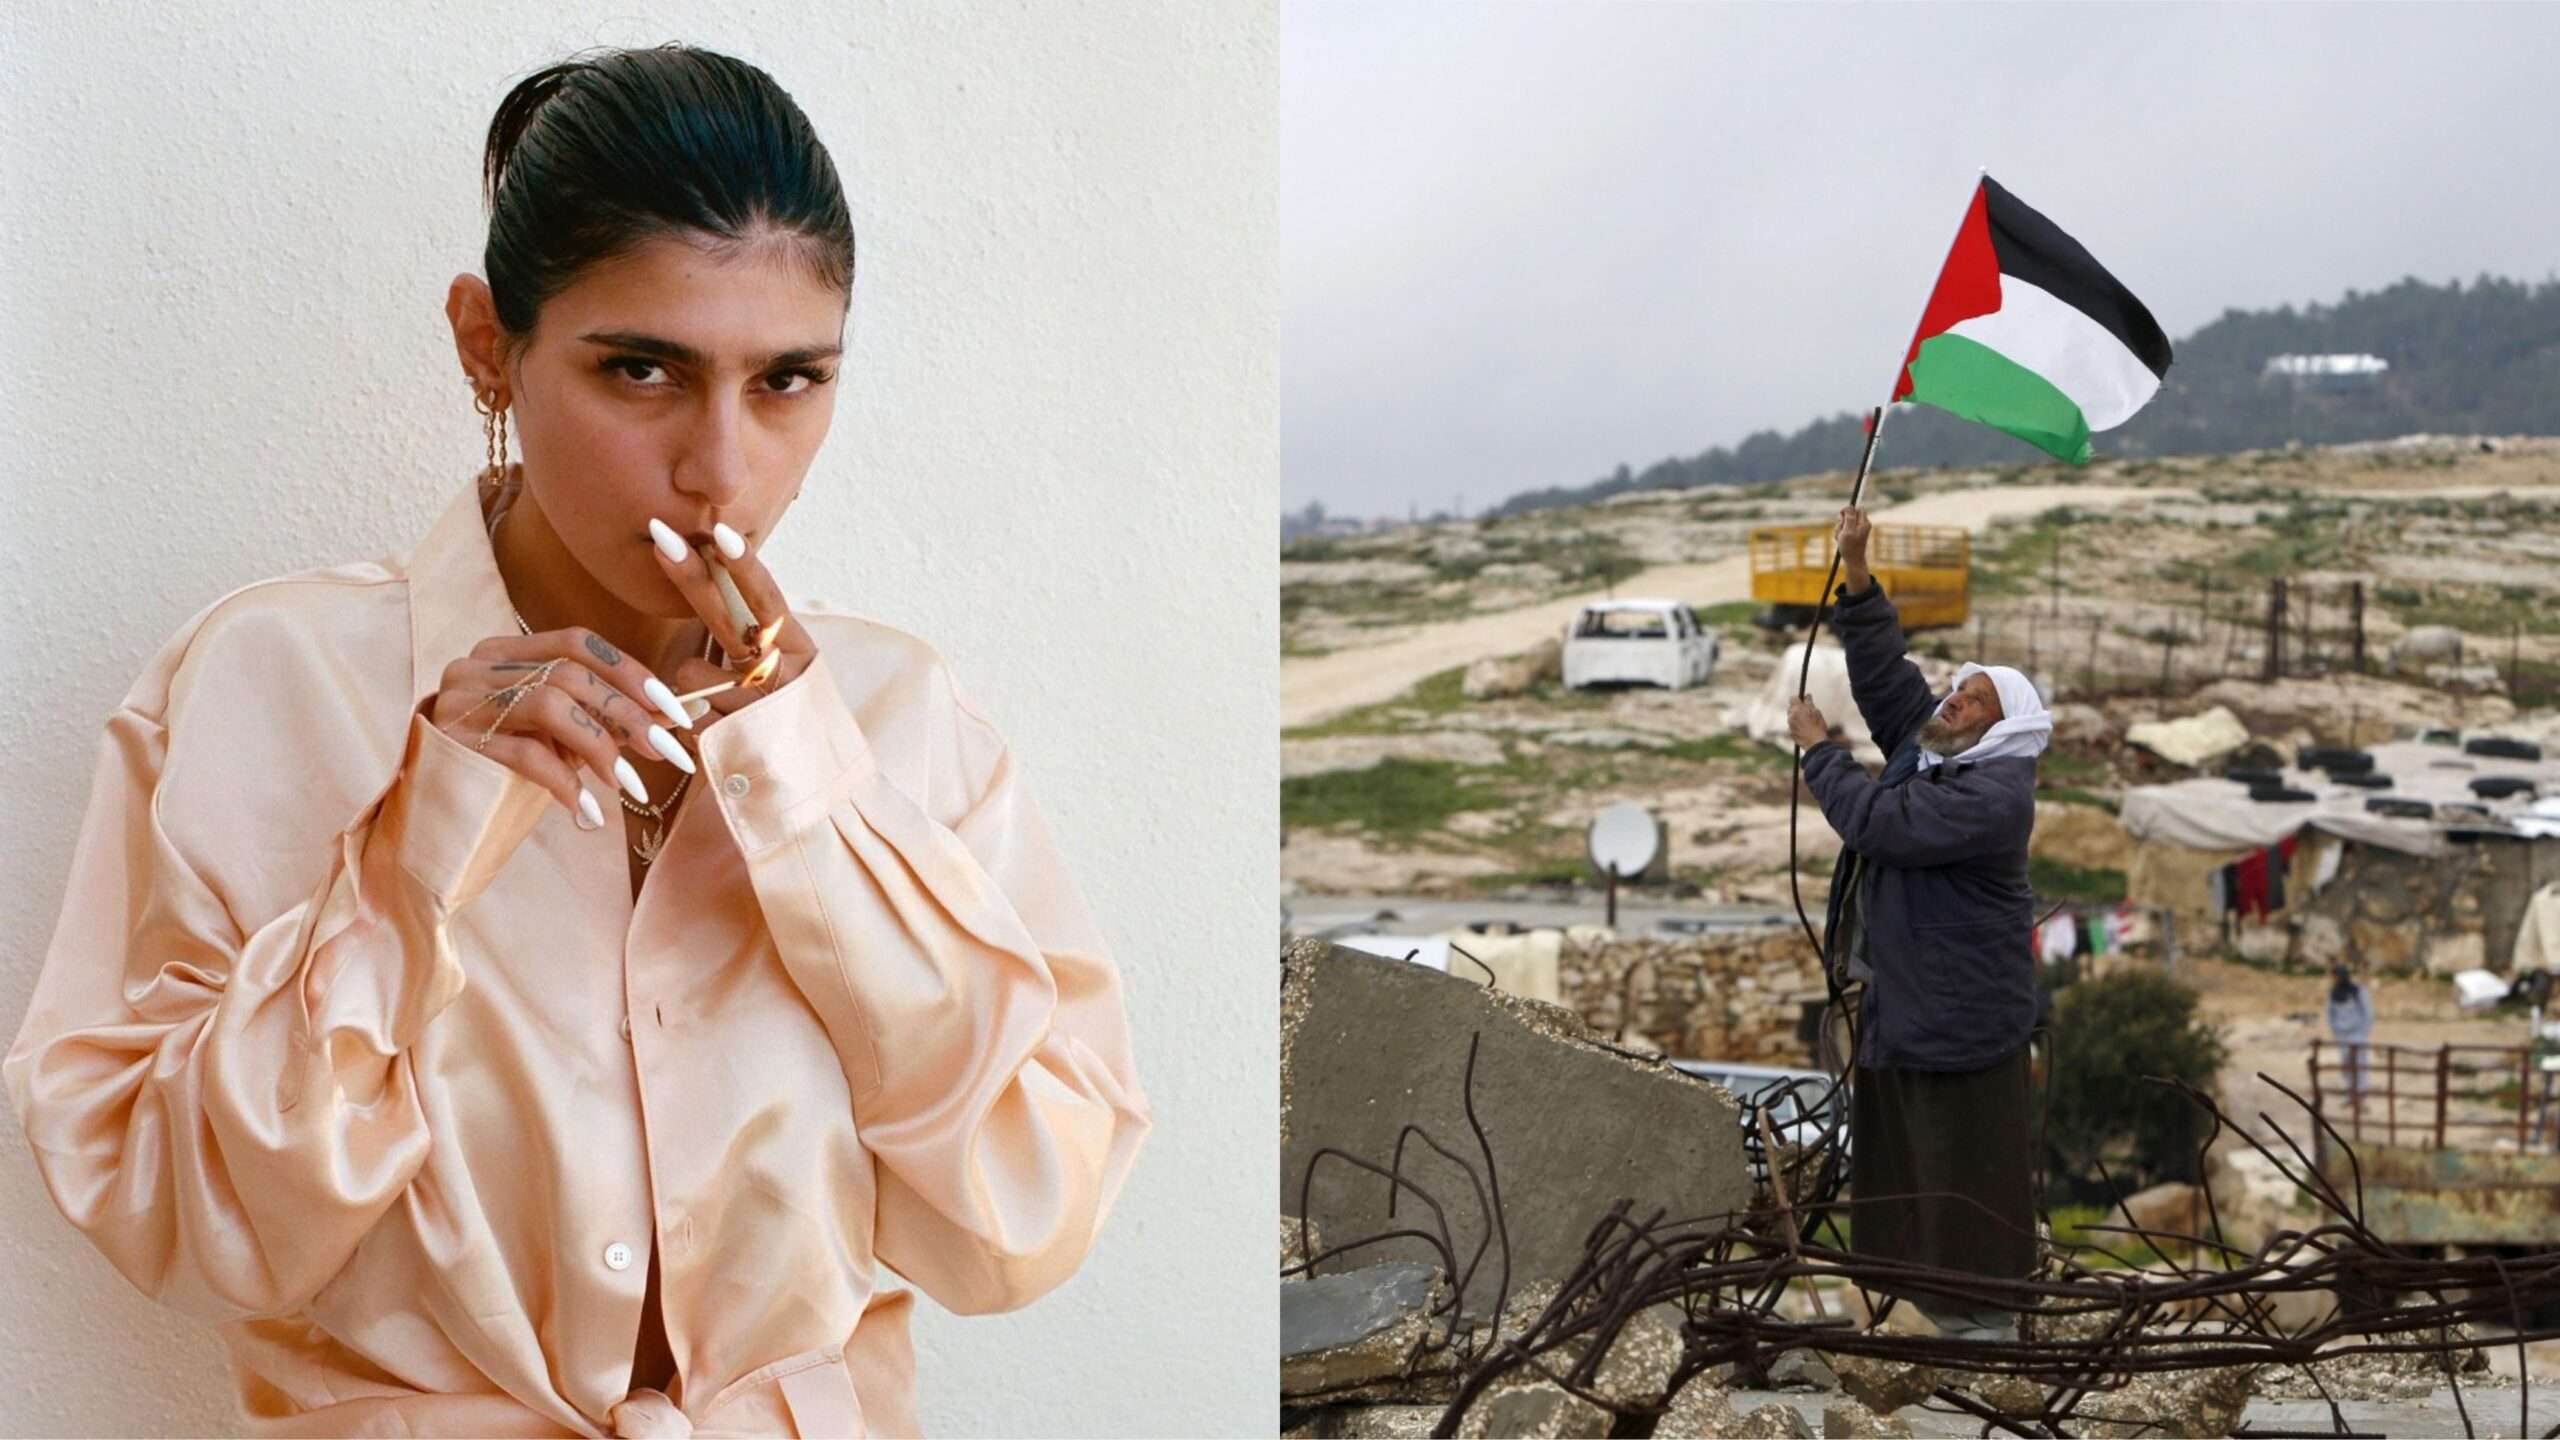 Mia Khalifa voiced support for Palestine